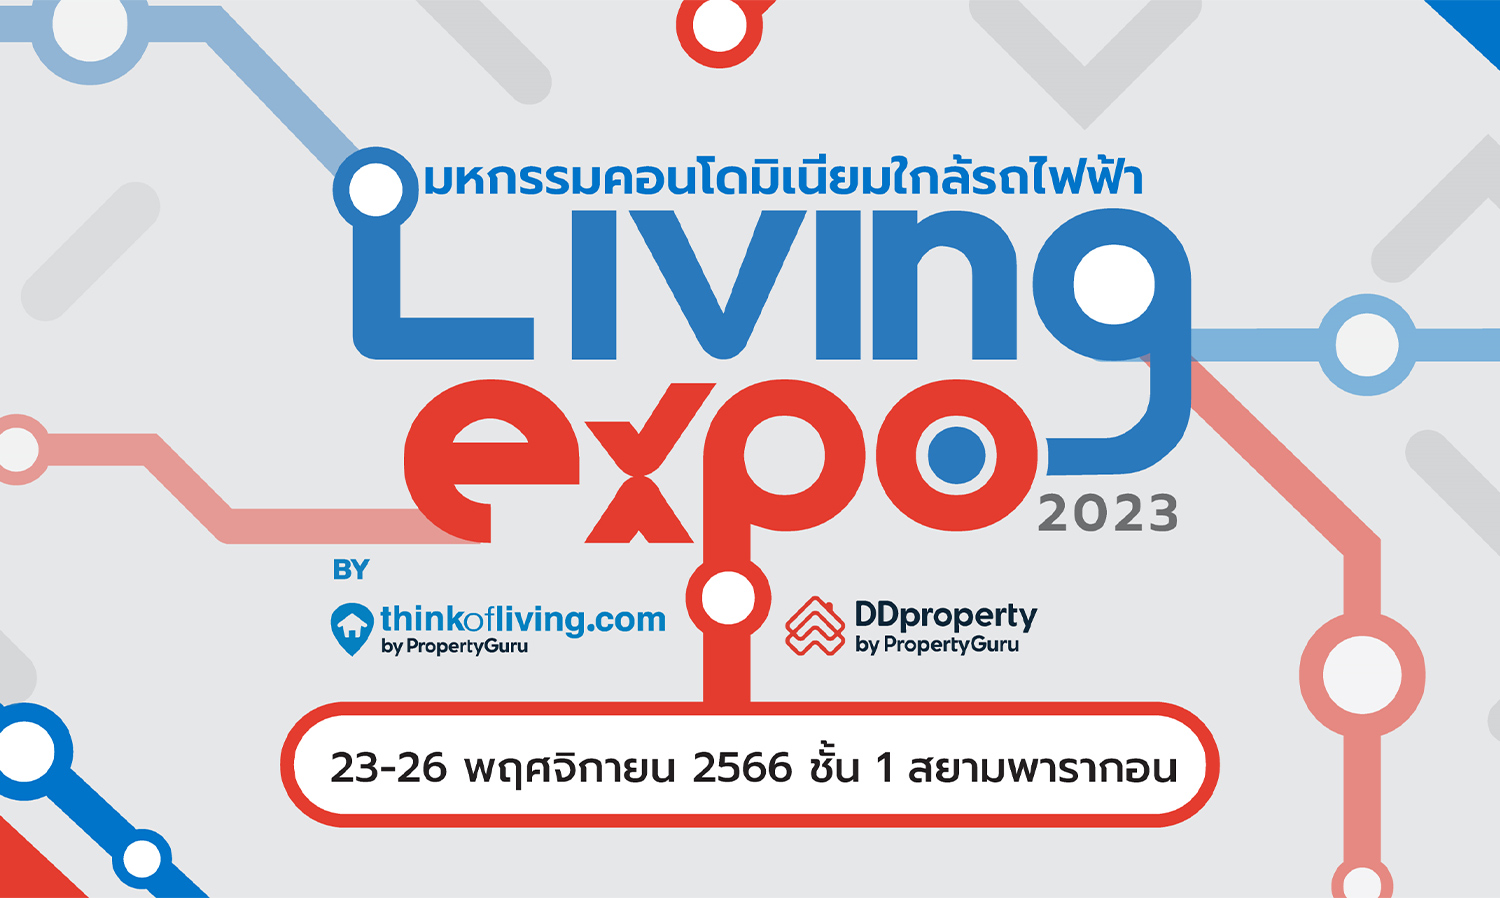 Think of Living และ DDproperty ปลุกตลาดอสังหาฯ โค้งสุดท้ายปี 66 ปั้นงาน Living Expo 2023 มหกรรมบ้าน-คอนโดฯ ใกล้รถไฟฟ้า 23-26 พ.ย. นี้